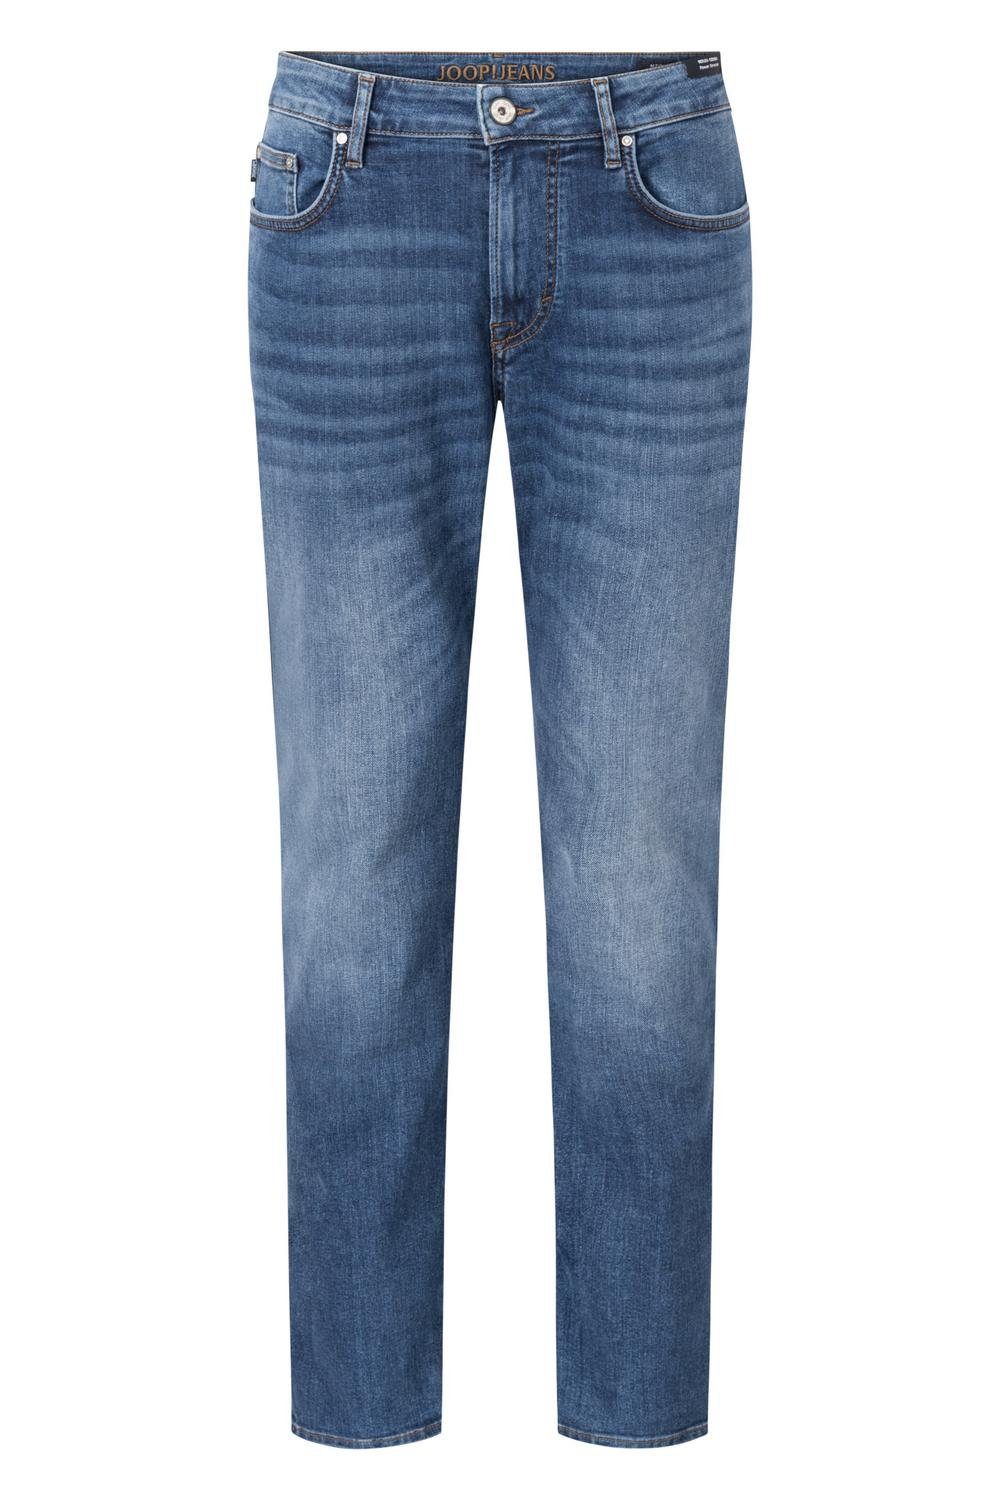 Joop Jeans Regular-fit-Jeans 15 Mitch_NOS 1001450